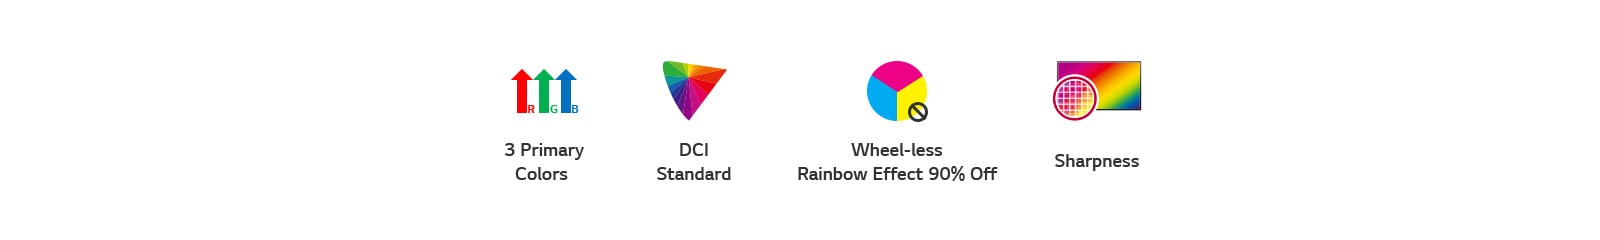 LG Wheel-less laser and LED Technology